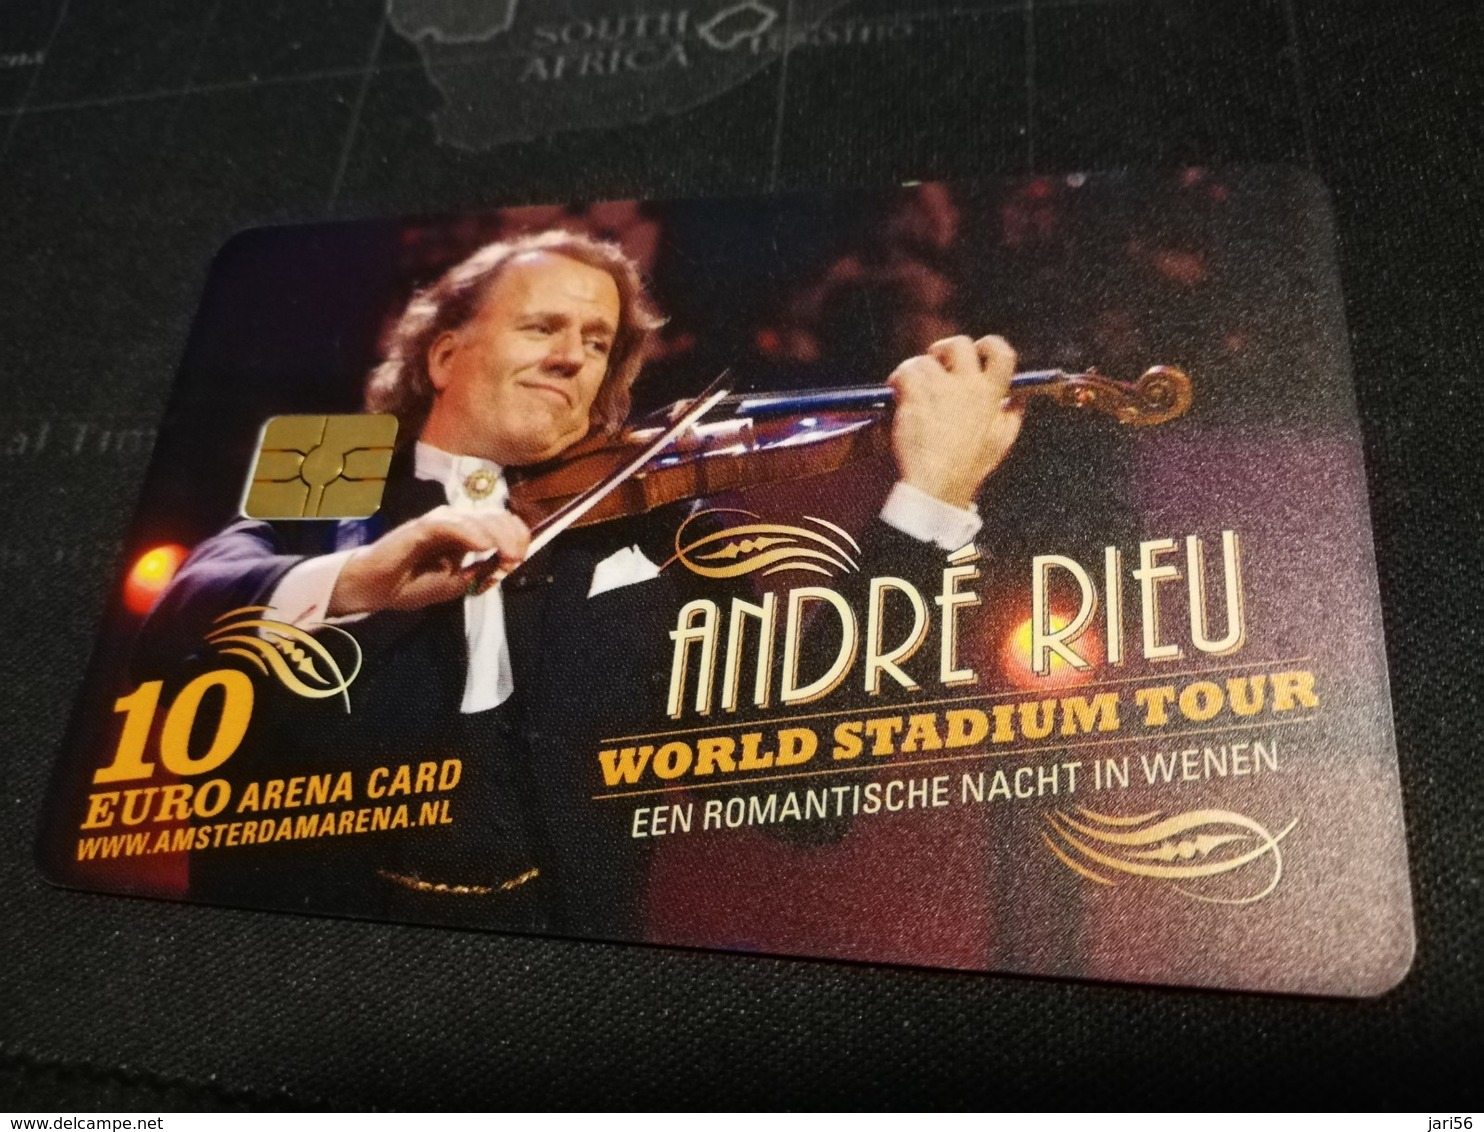 NETHERLANDS  ARENA CARD  ANDRE RIEU WORLD TOUR WENEN    €10,- USED CARD  ** 1424** - öffentlich